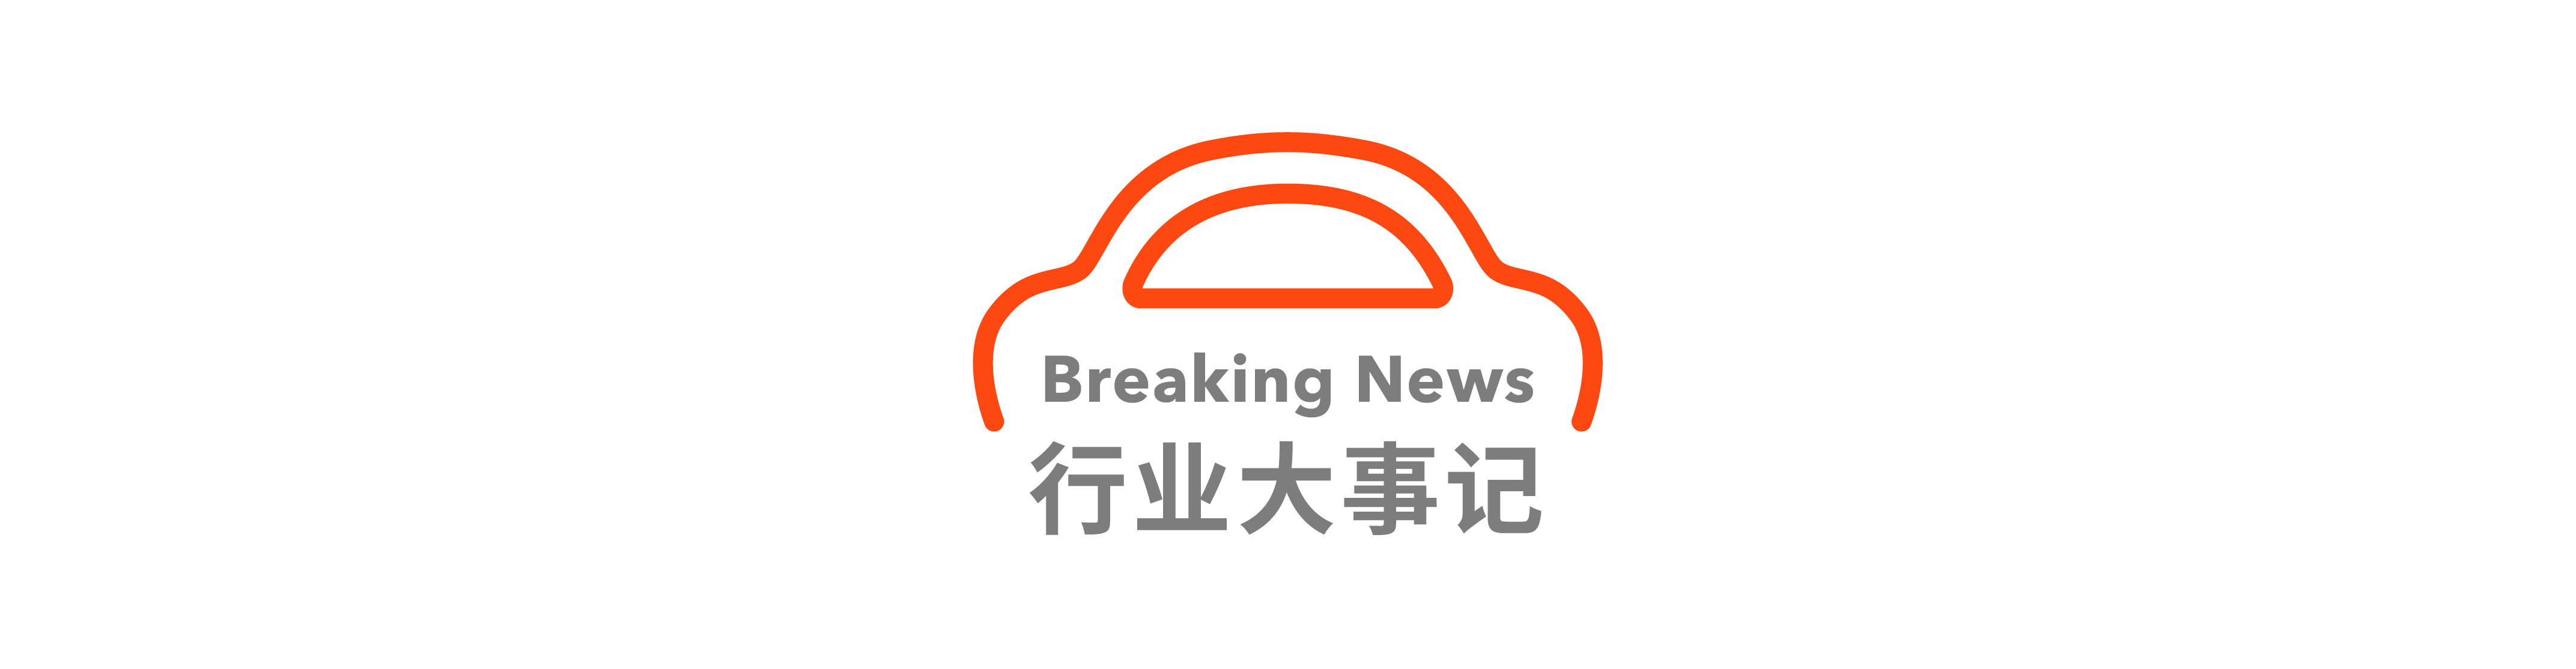 Dong Che Daily｜Tesla App ist down, Musk entschuldigt sich / Ferrari veröffentlicht offizielles Bild des neuen Flaggschiffs / Euler Haomao wird der falschen Propaganda verdächtigt - 33 1